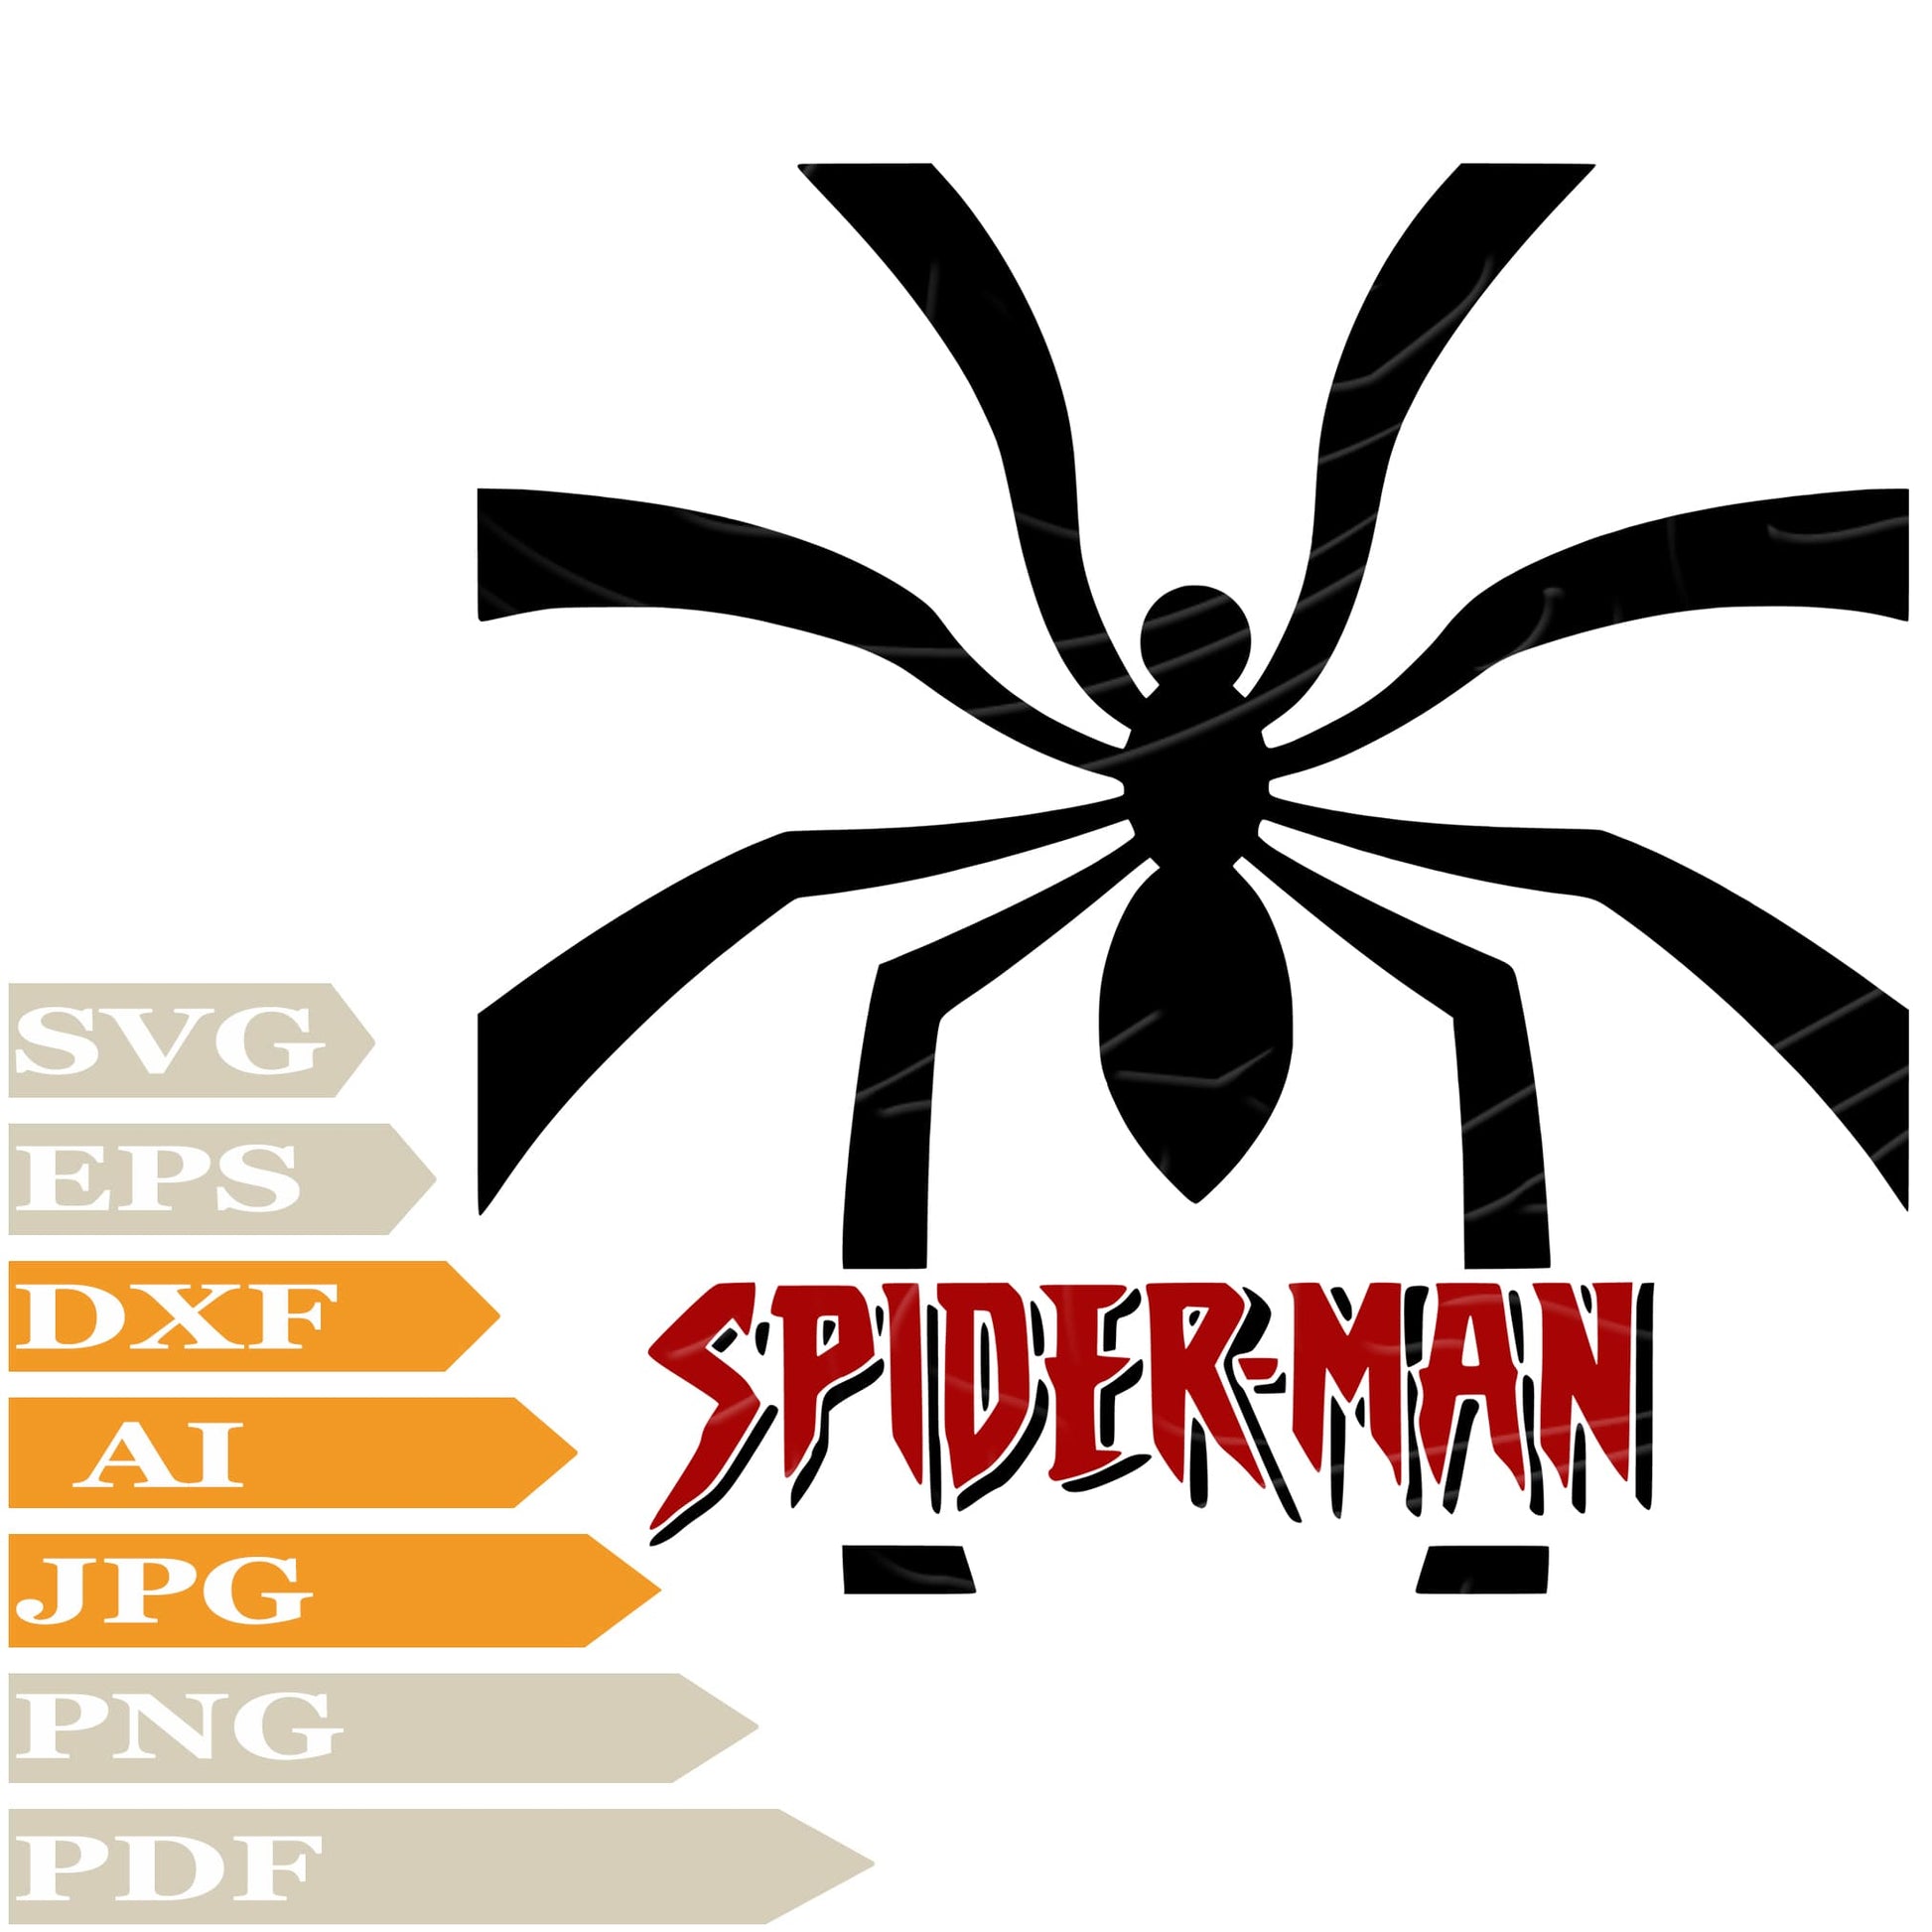 sofvintage-Spider SVG-Spiderman SVG File-Spiderman Logo SVG Design-Spider Vector Graphics-Spiderman PNG-Spider For Cricut-Spiderman Cut File-Black Spider Digital Download-Spiderman Wall sticker-Spider Clip art-Spiderman For T-Shirt-Spider Printable-Spiderman Silhouette